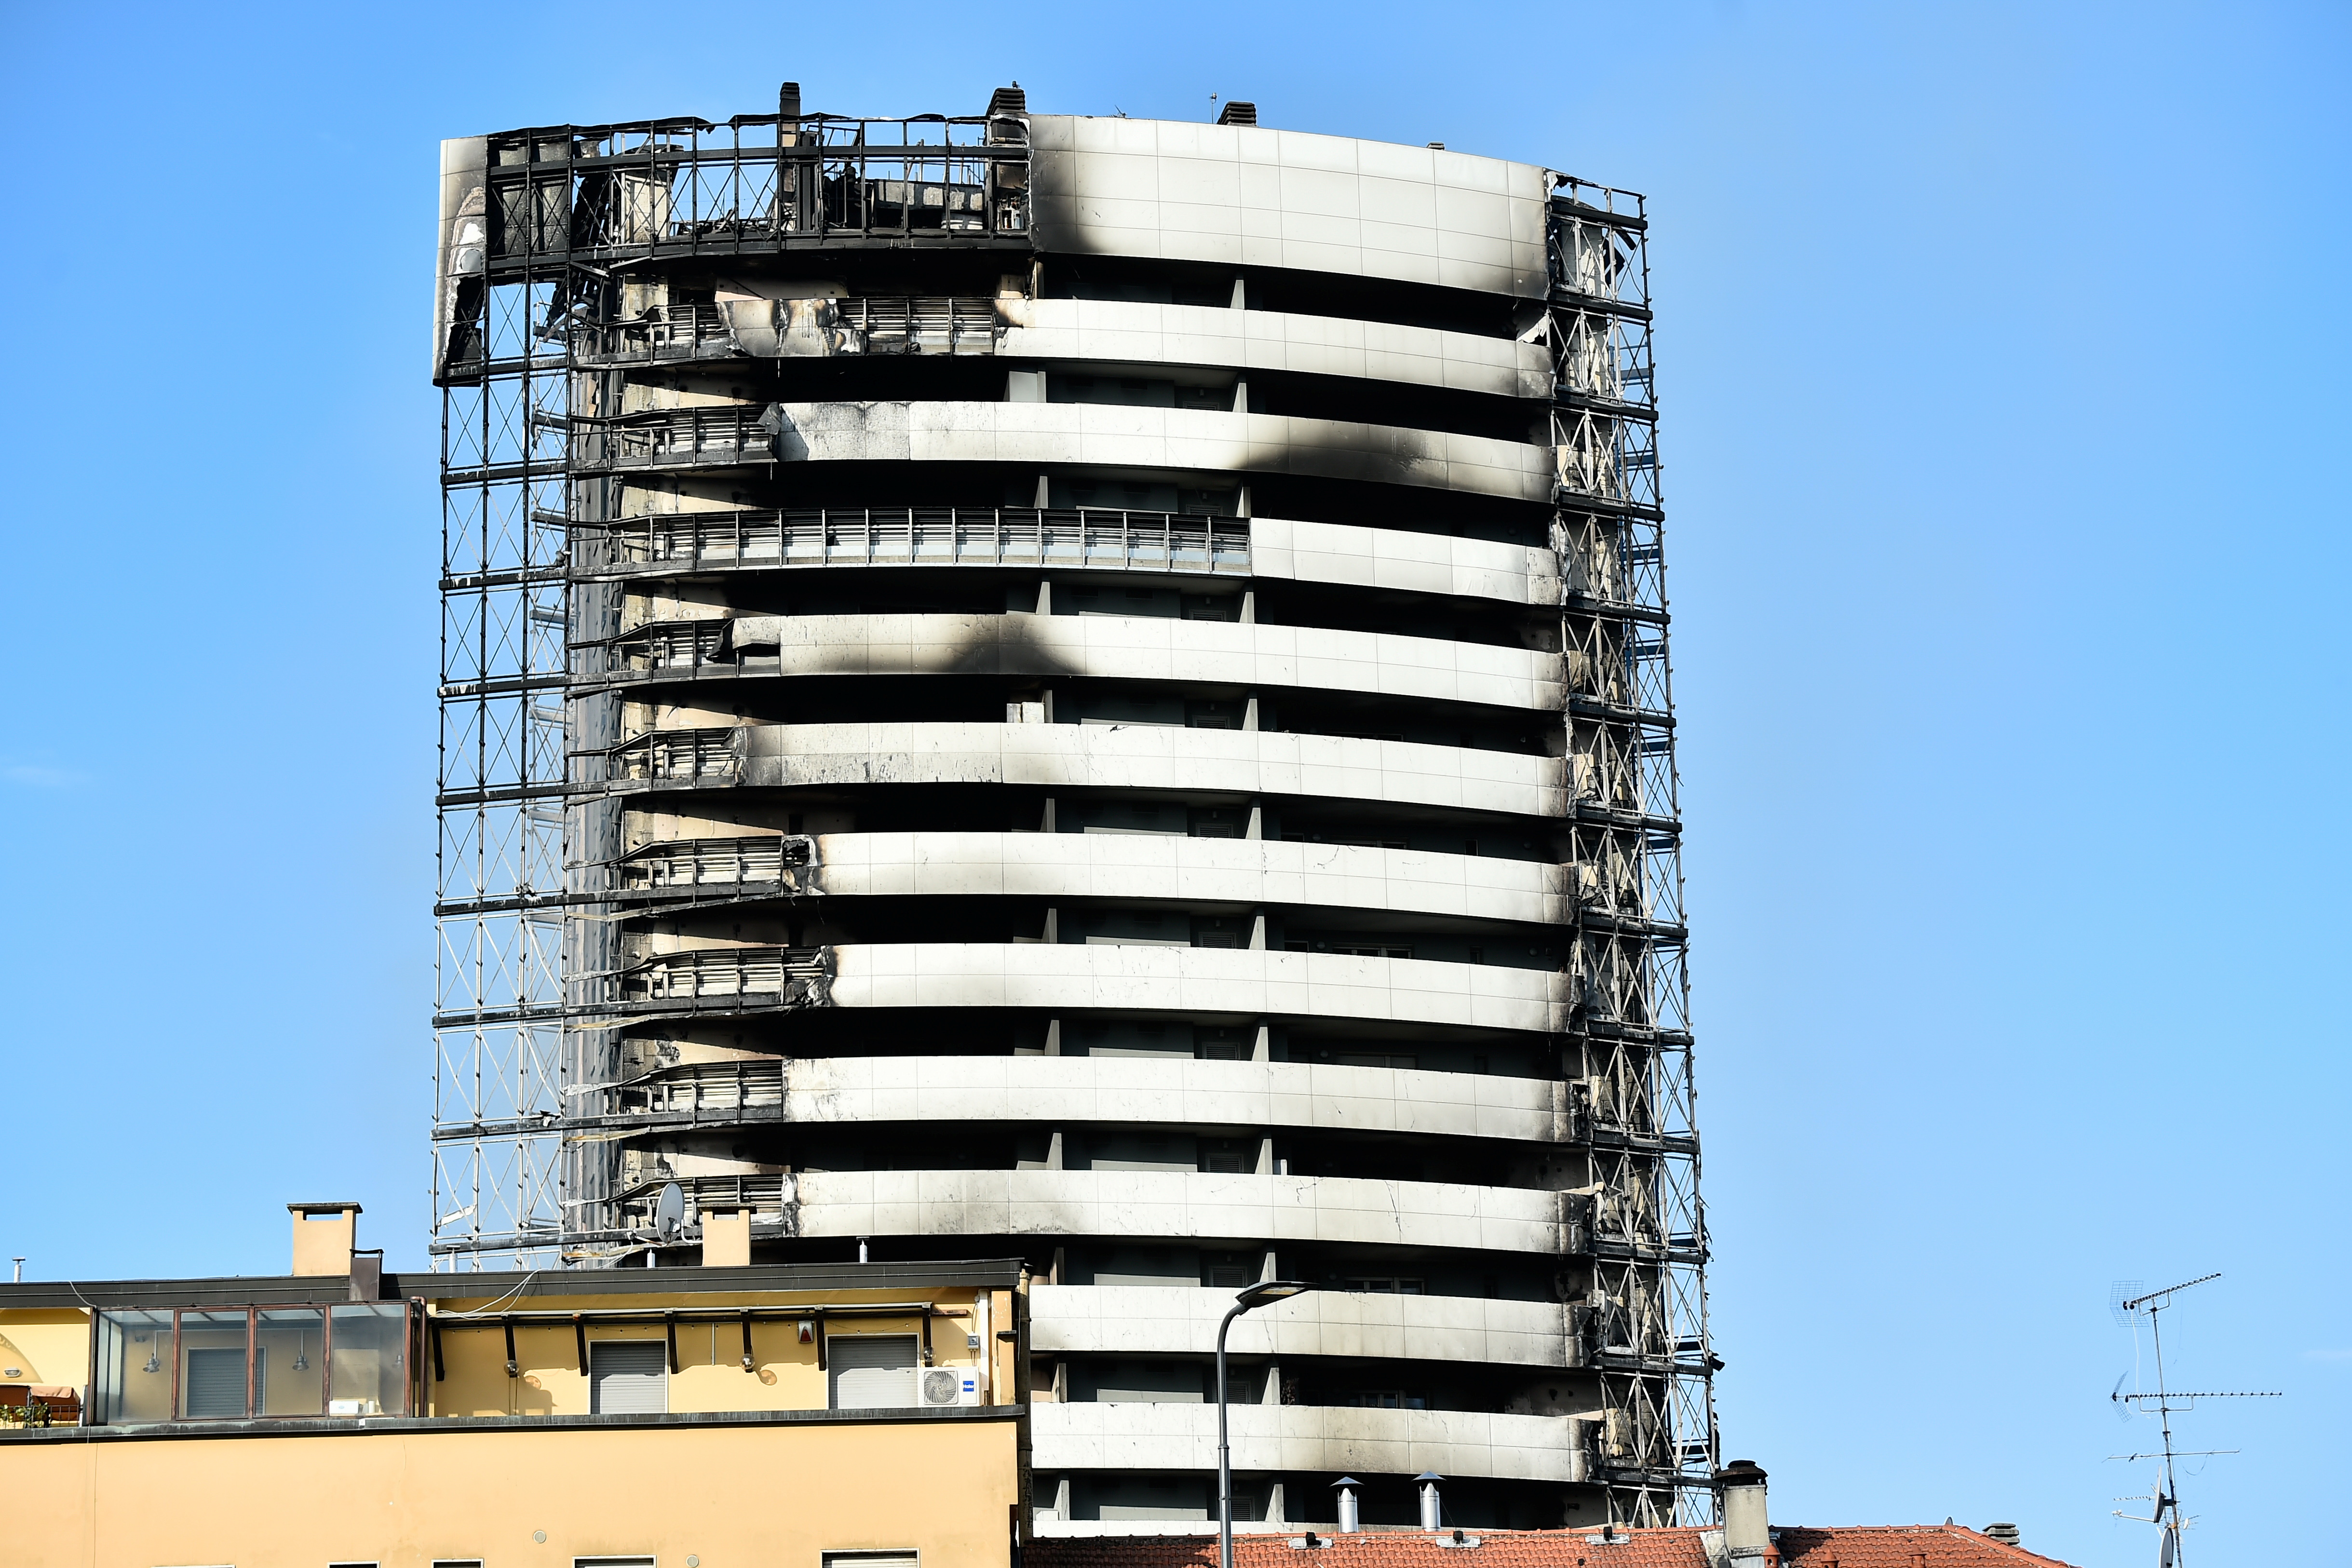 Fire rages through Milan's residential tower block